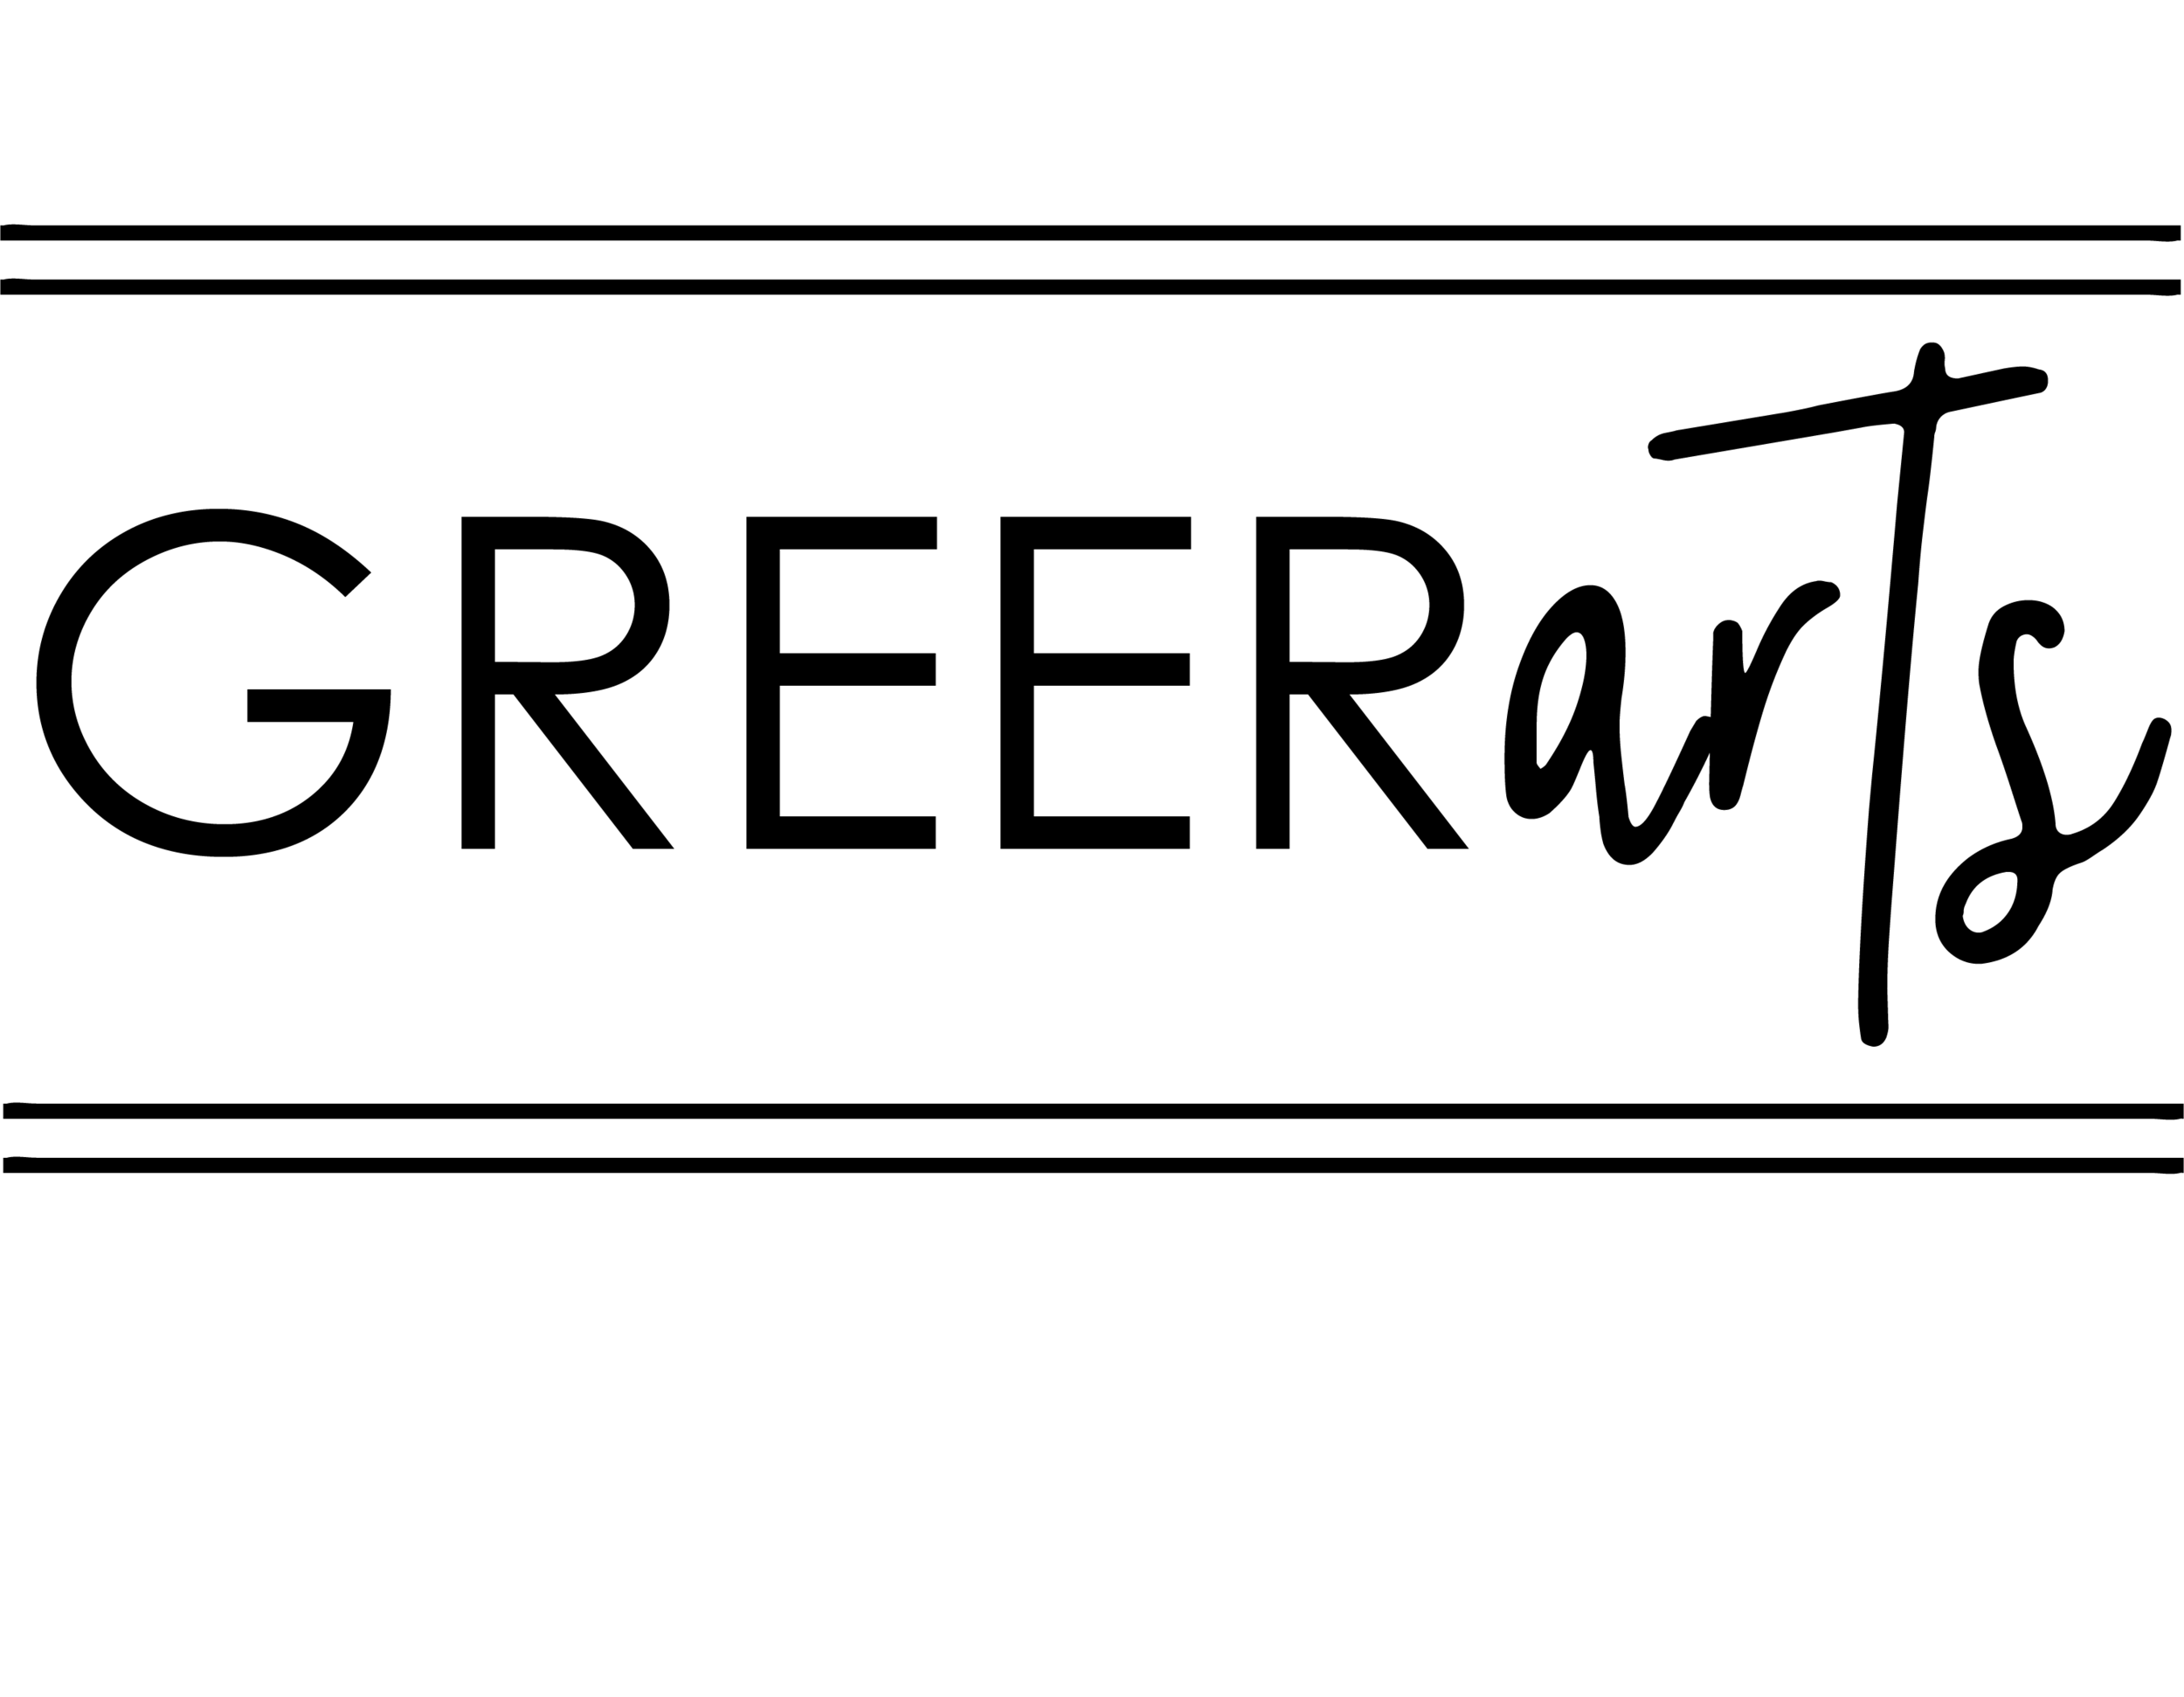 GA logo final black text.png